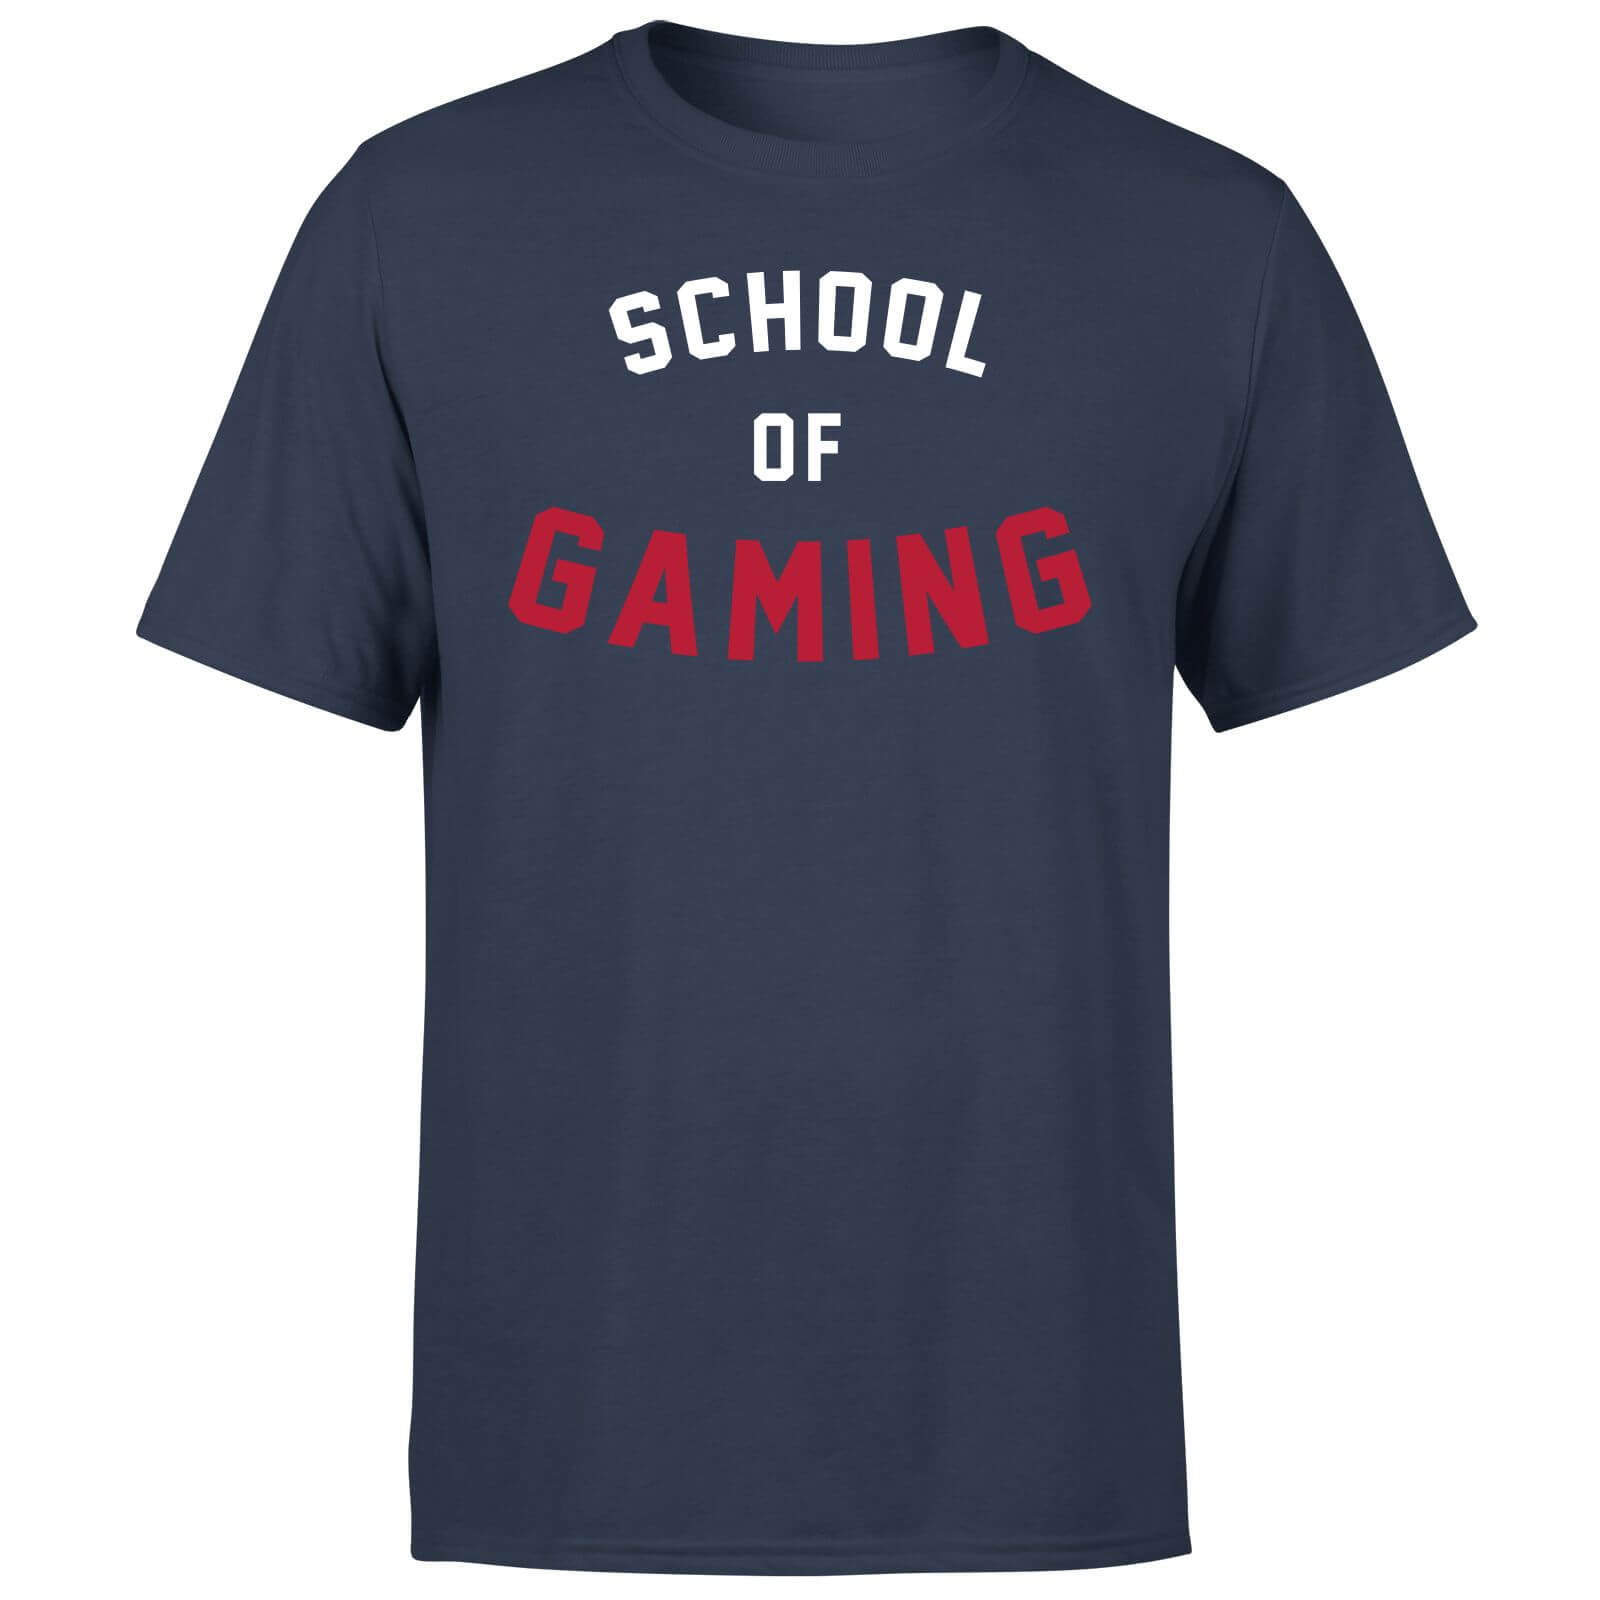 School of Gaming T-Shirt - Navy - S - Navy